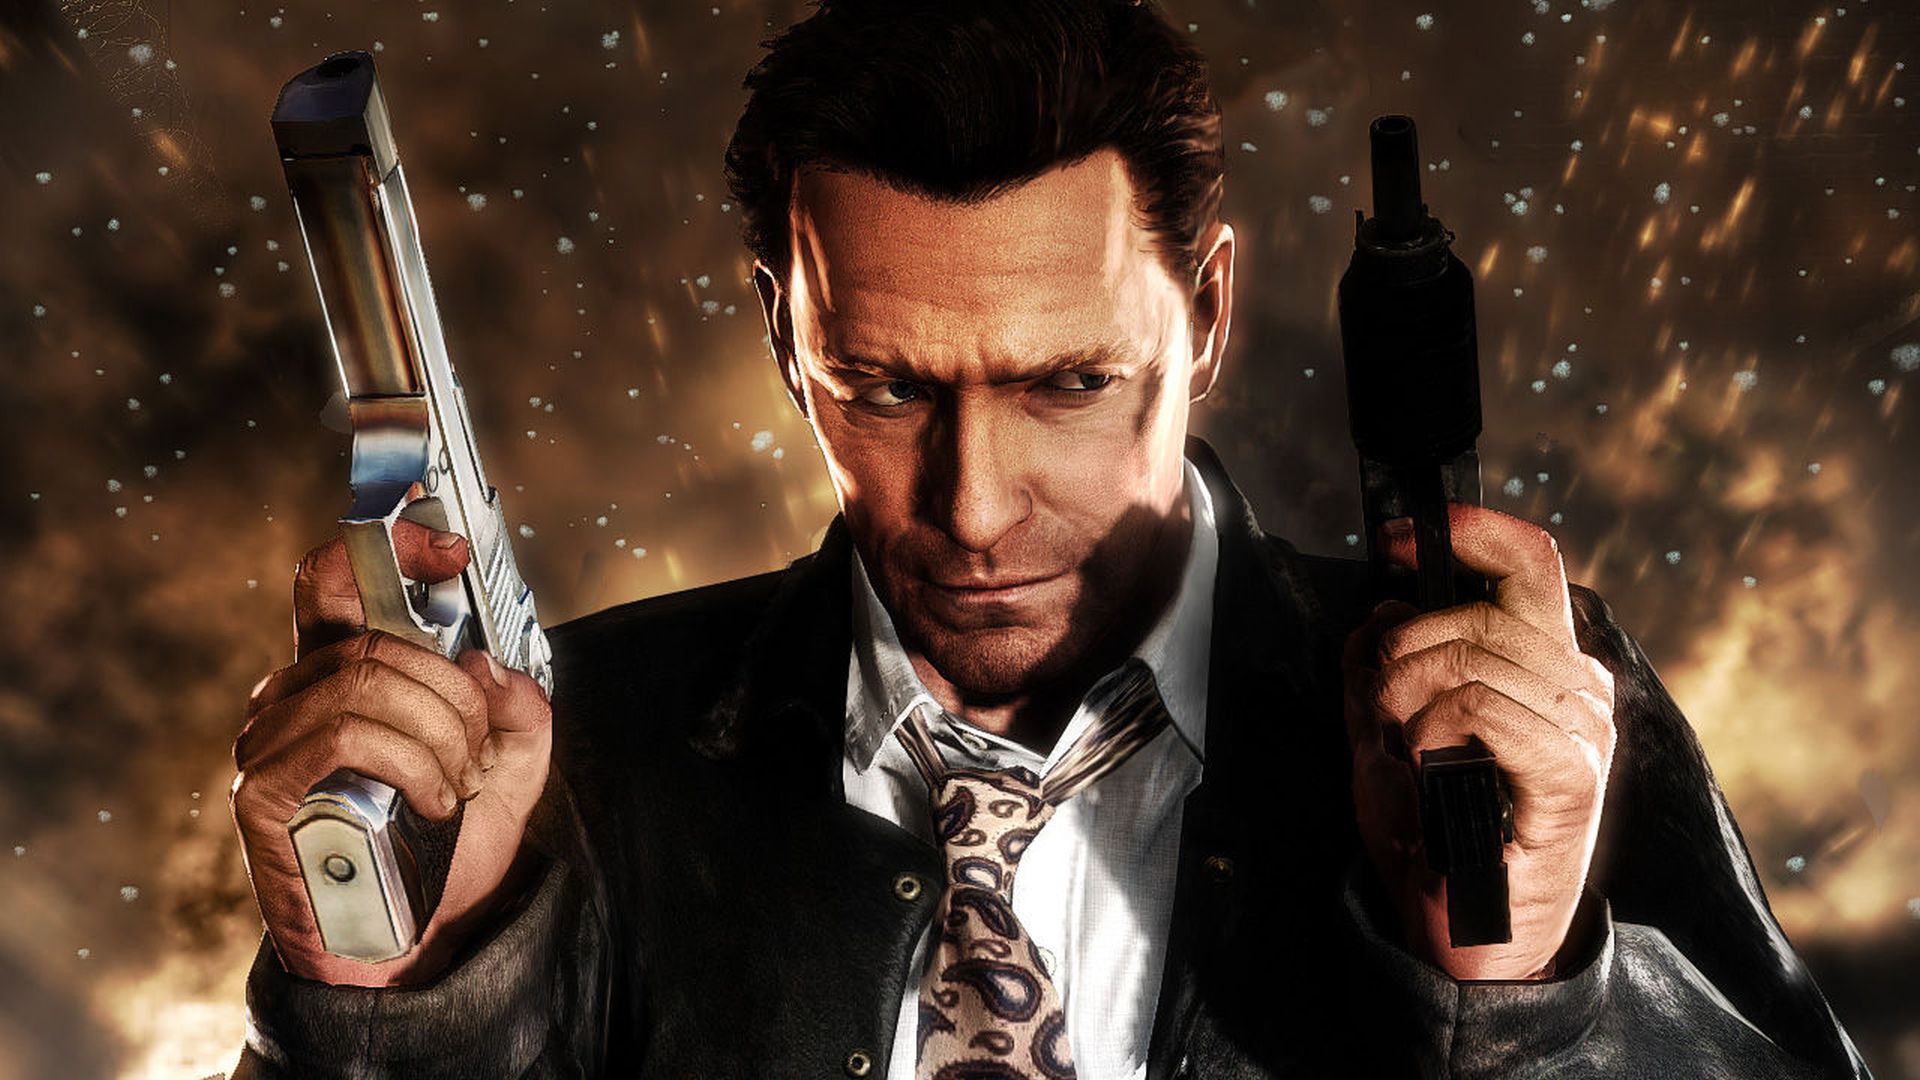 Max Payne 4 - Rockstar Mag